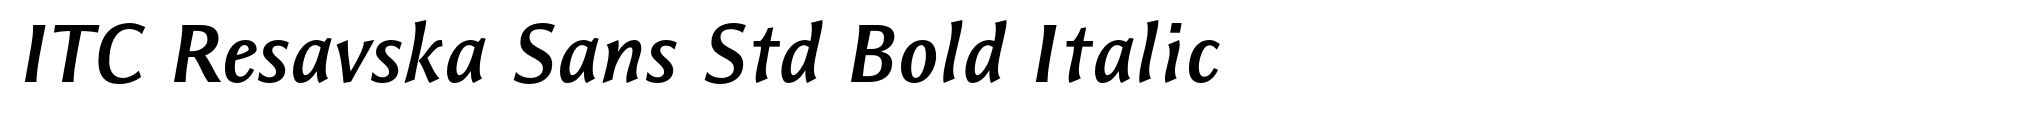 ITC Resavska Sans Std Bold Italic image